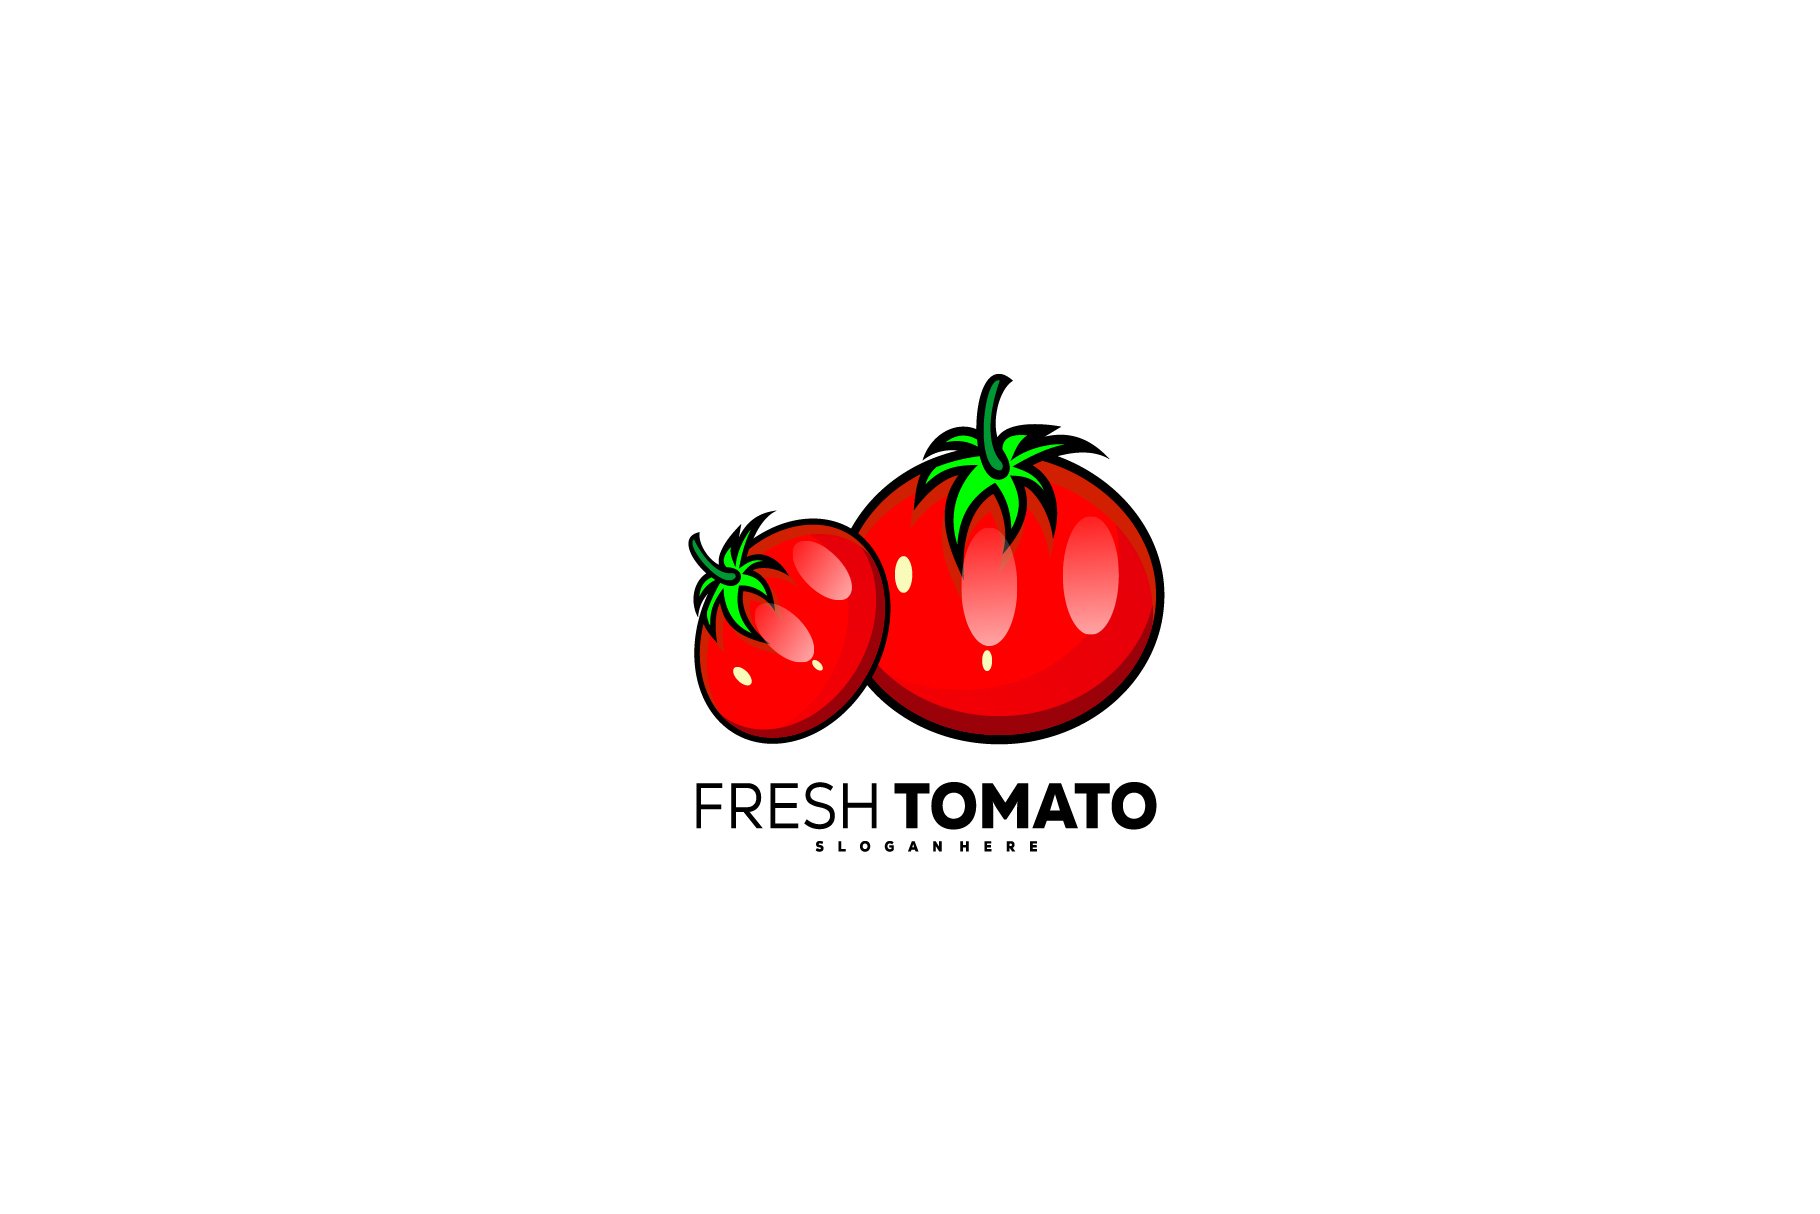 fresh tomato design illustration art cover image.